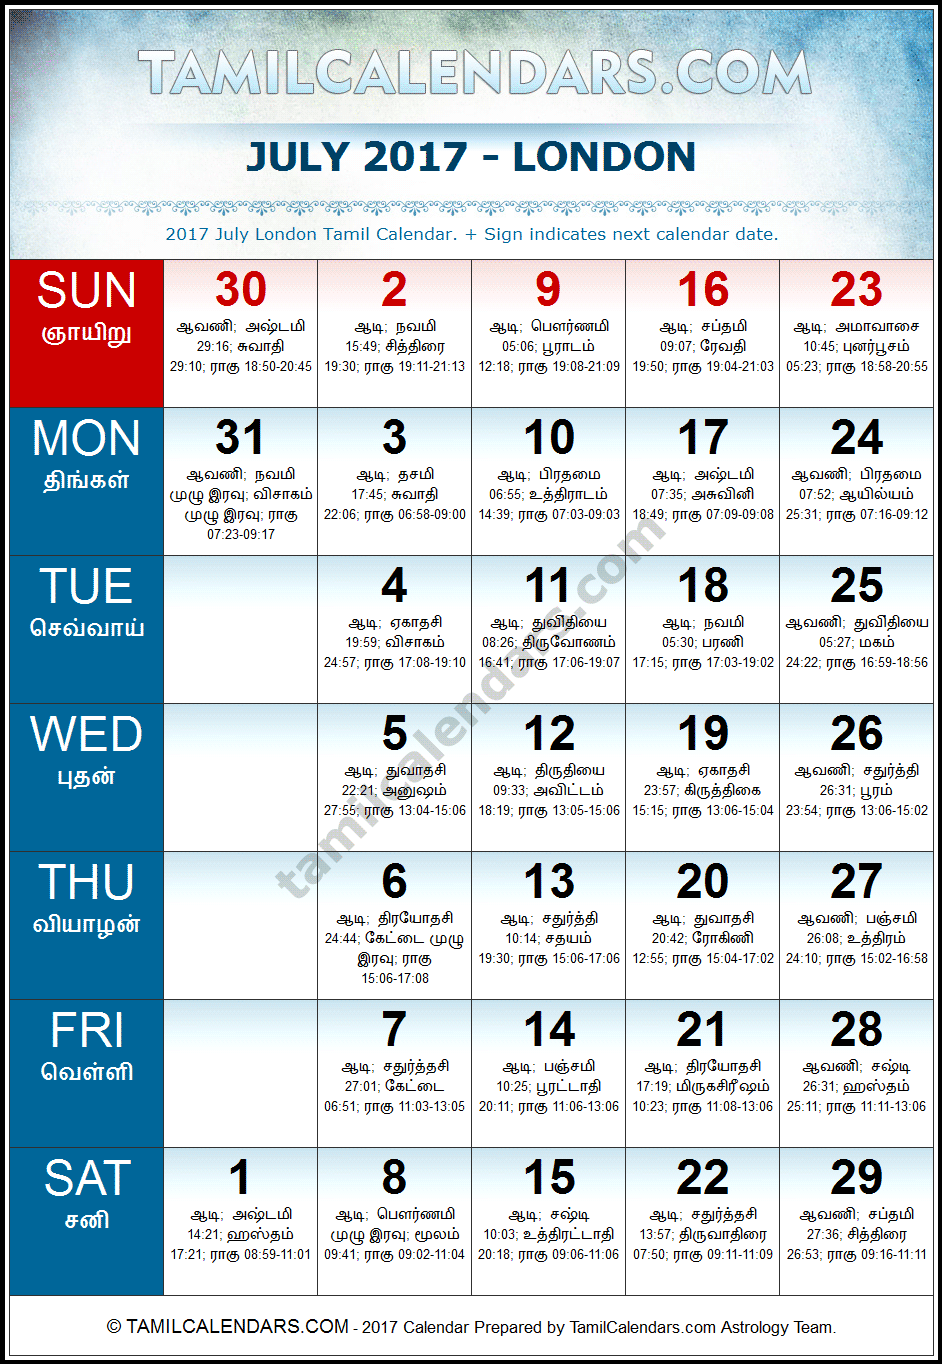 July 2017 Tamil Calendar for London, UK